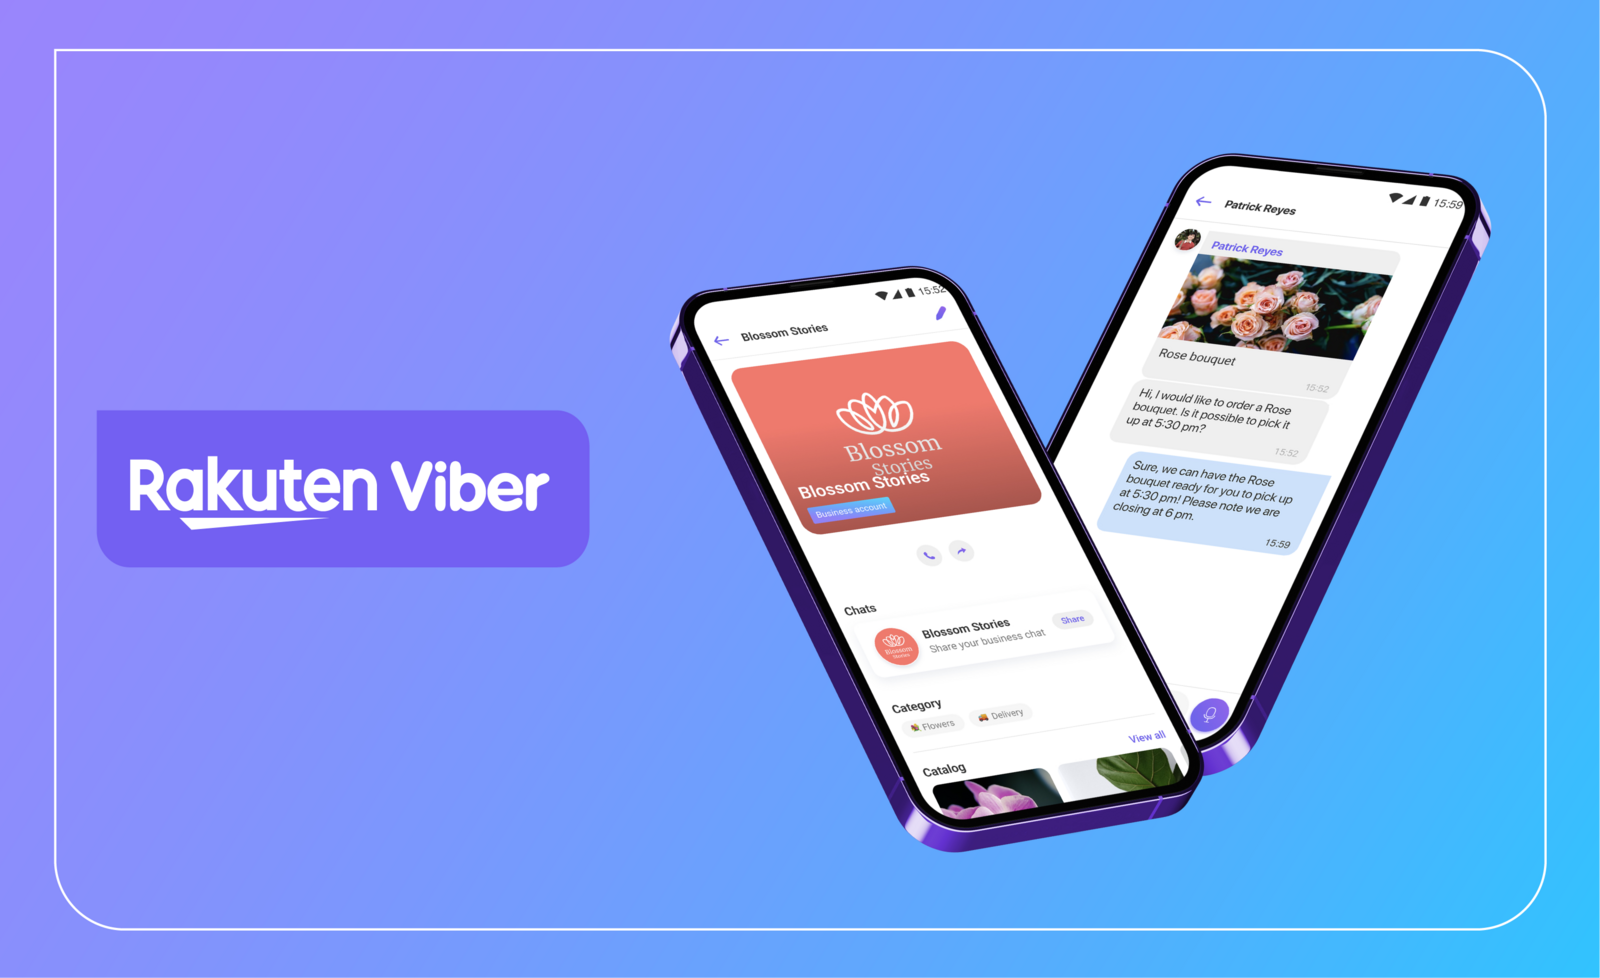 Main Rakuten Viber Viber debuts giant leap forward in global strategy